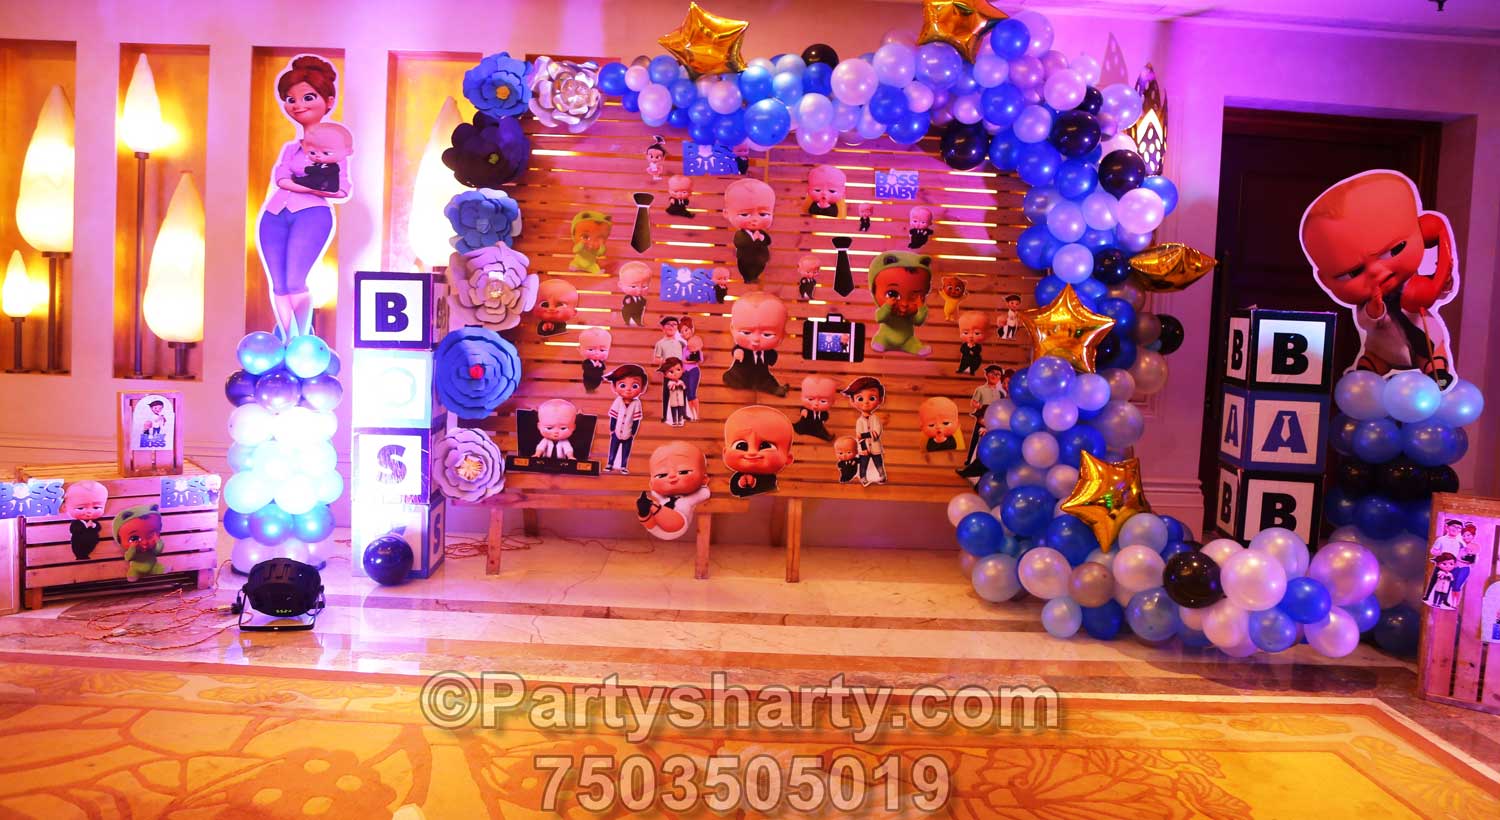 Boss baby theme birthday party photobooth